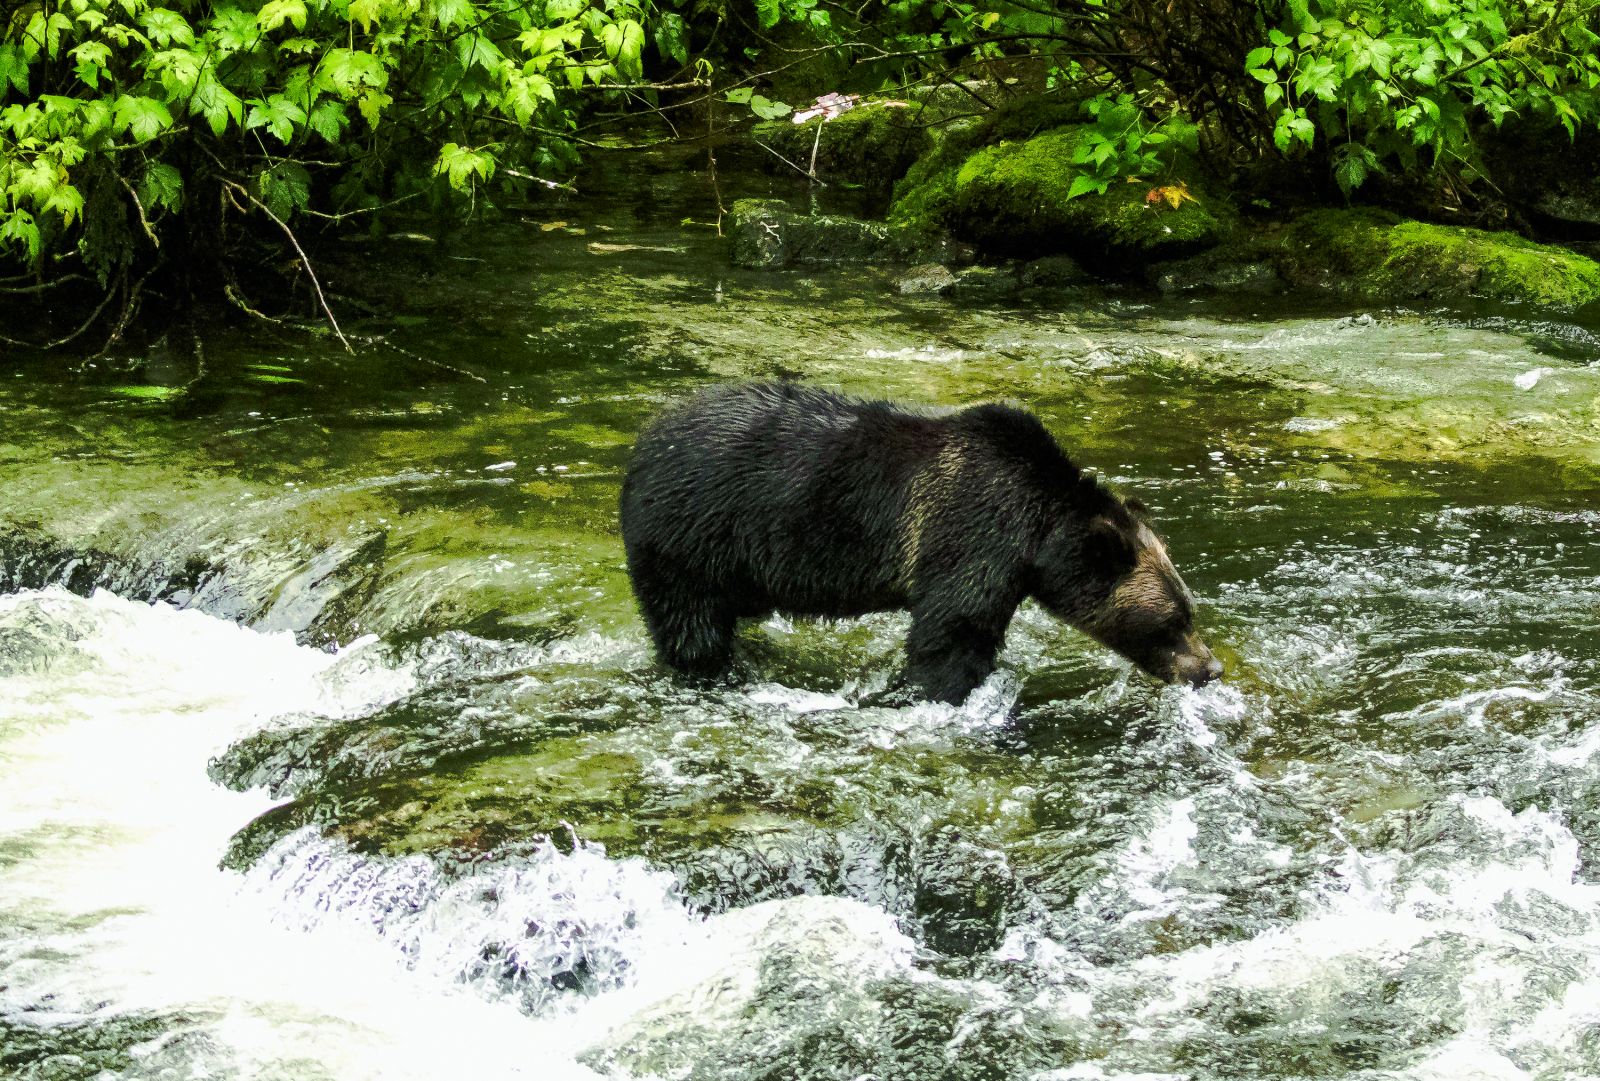 grizzly bear, black bear and kermode bear or spirit near